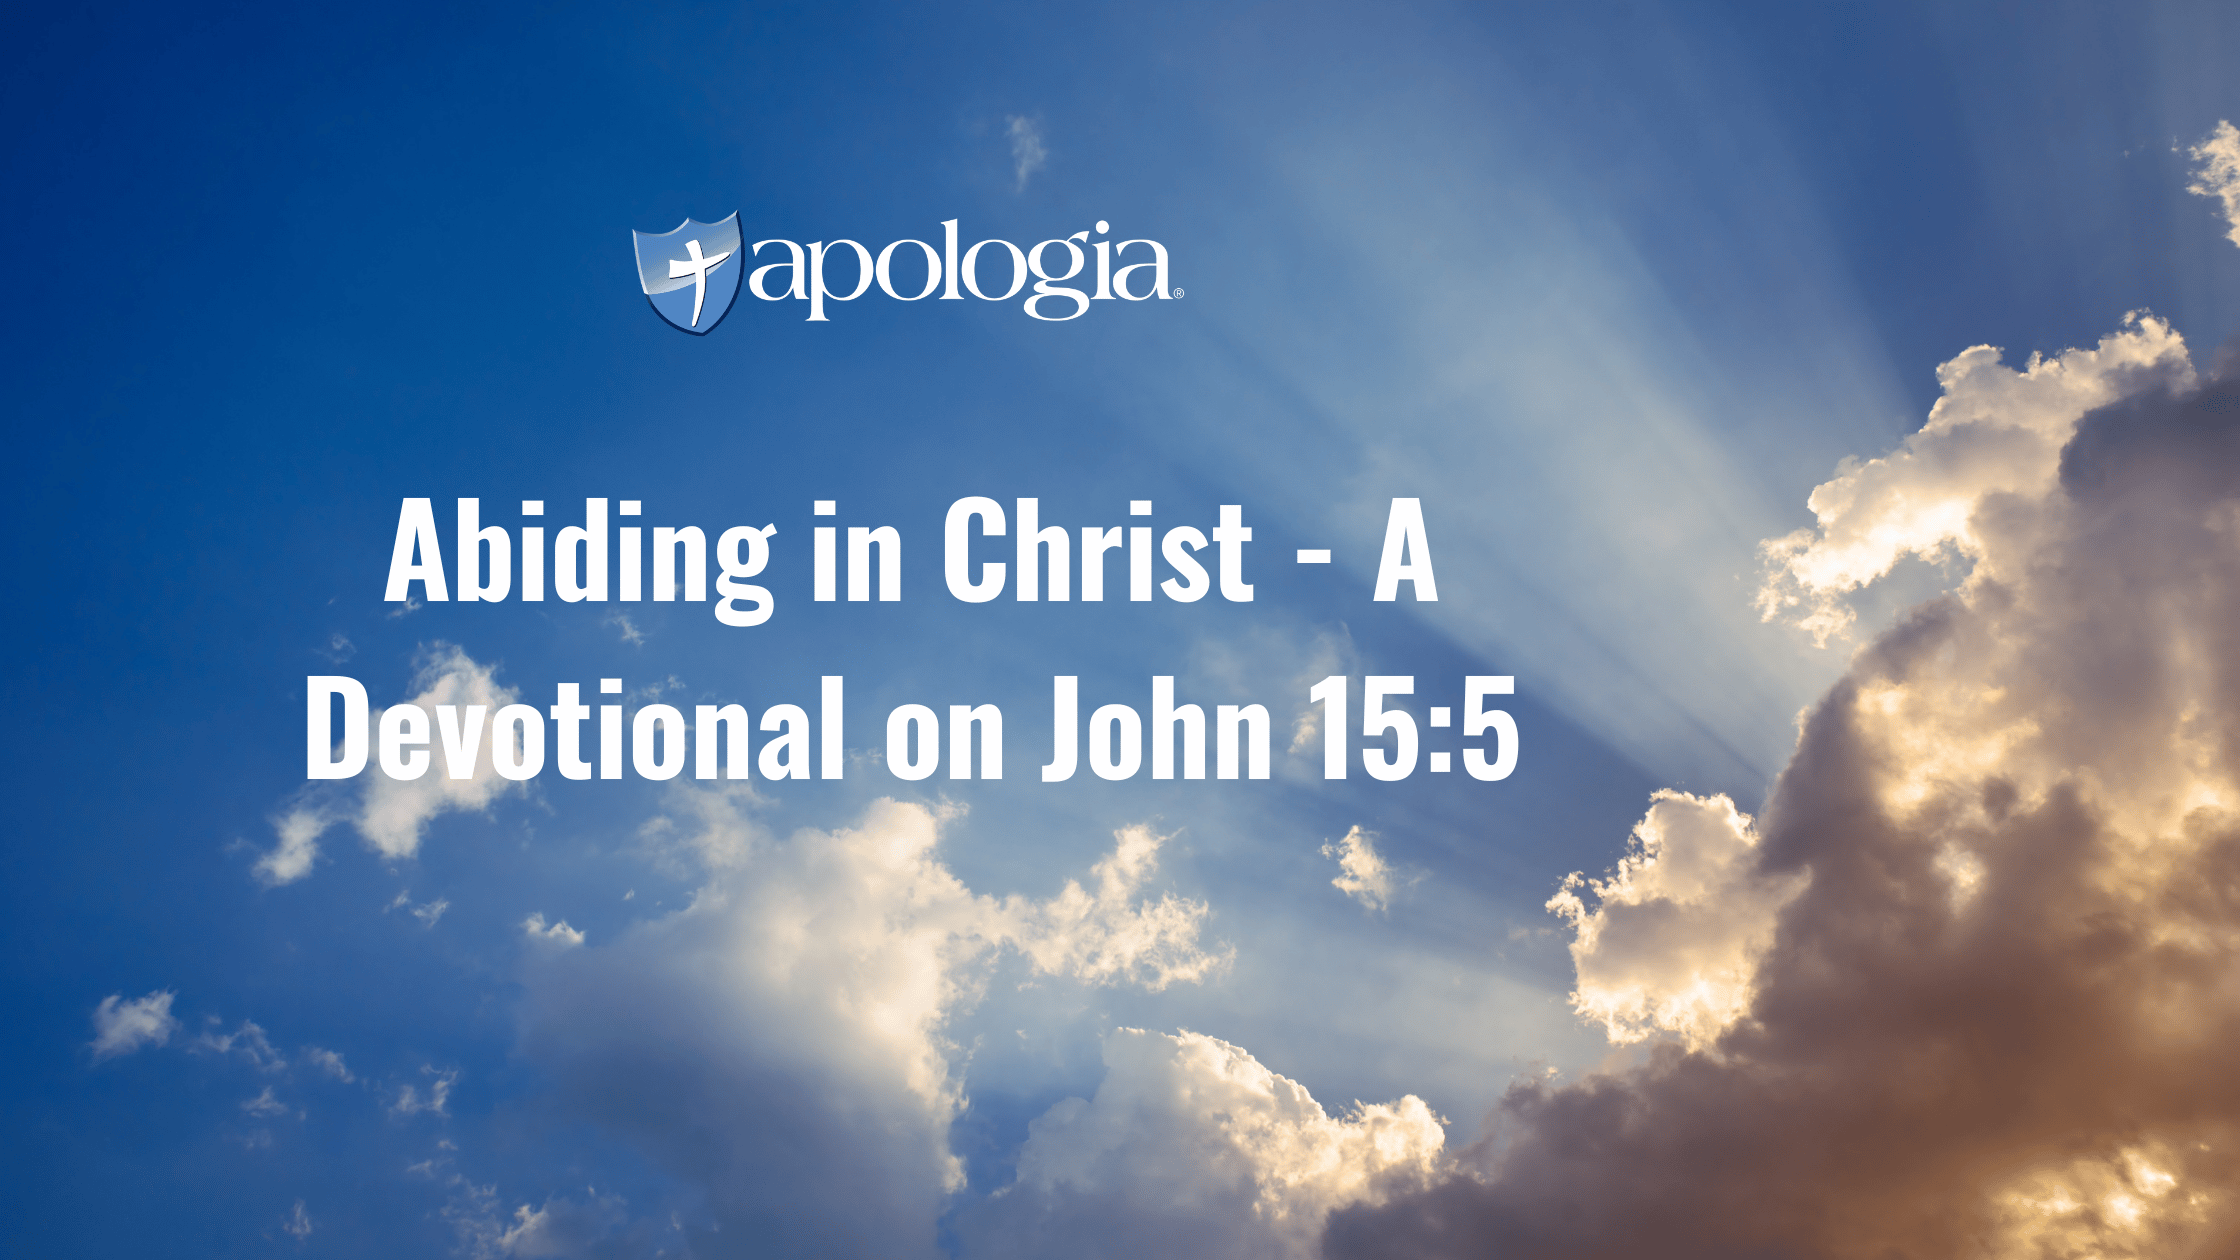 Abiding in Christ - A Devotional on John 15:5